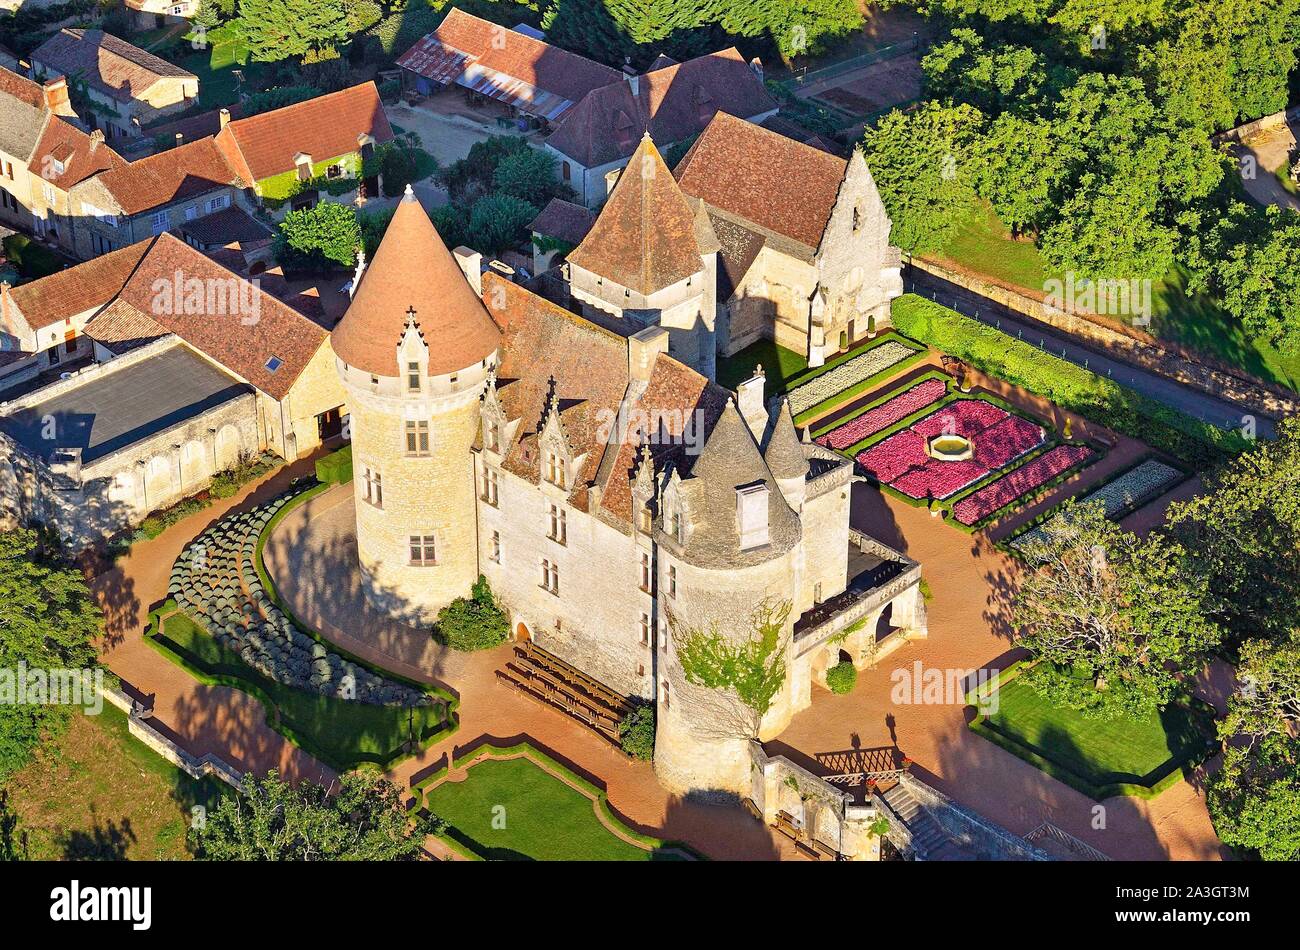 France, Dordogne, Perigord Noir, Dordogne Valley, Castelnaud la Chapelle, Chateau des Milandes, the French american dancer Josephine Baker's former property (aerial view) Stock Photo